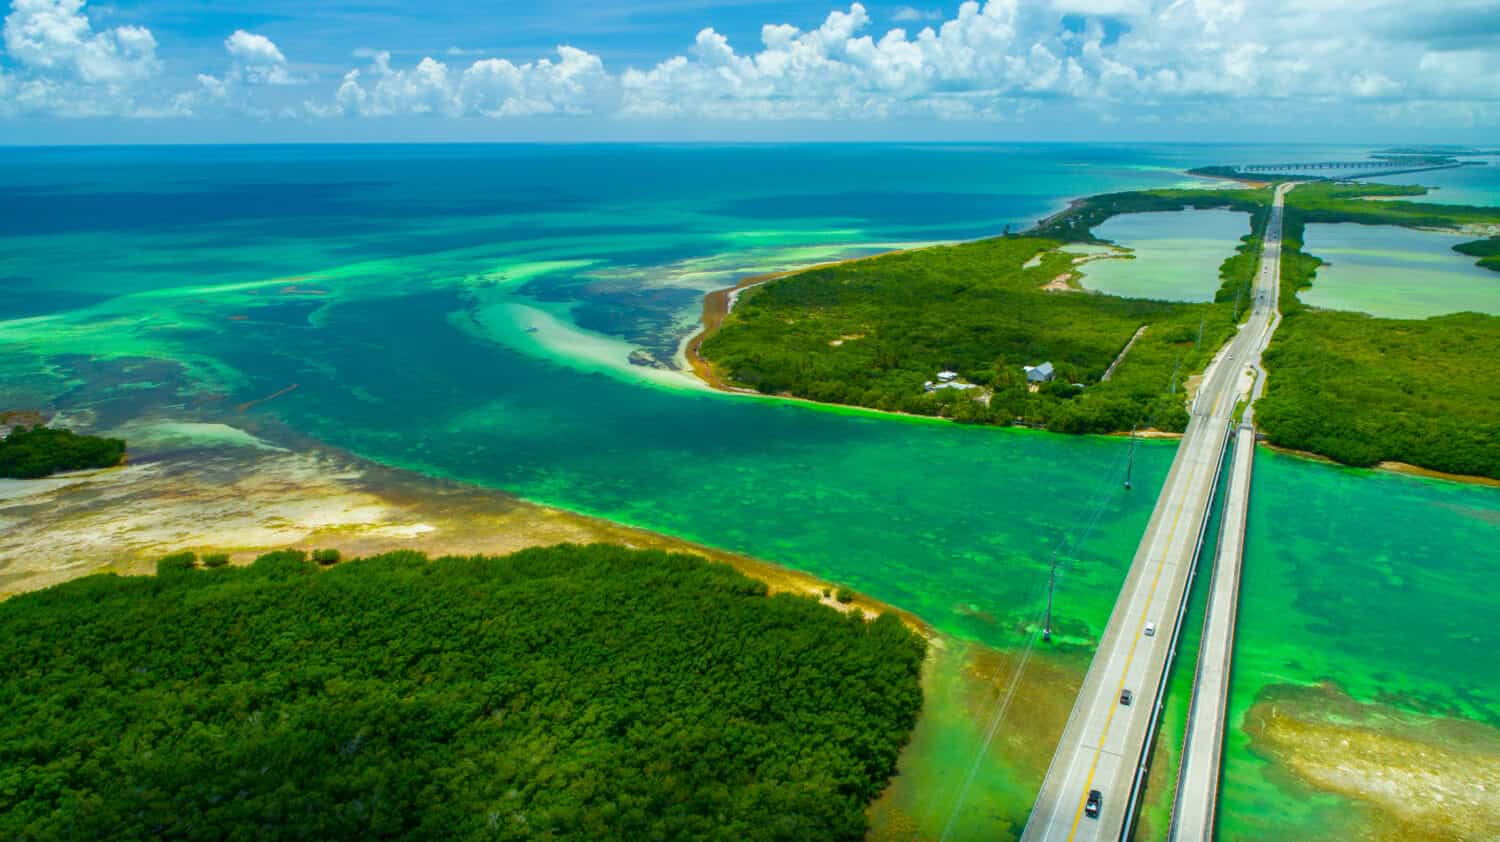 Autostrada d'oltremare per l'isola di Key West, Florida Keys, Stati Uniti.  Natura bellezza vista aerea.